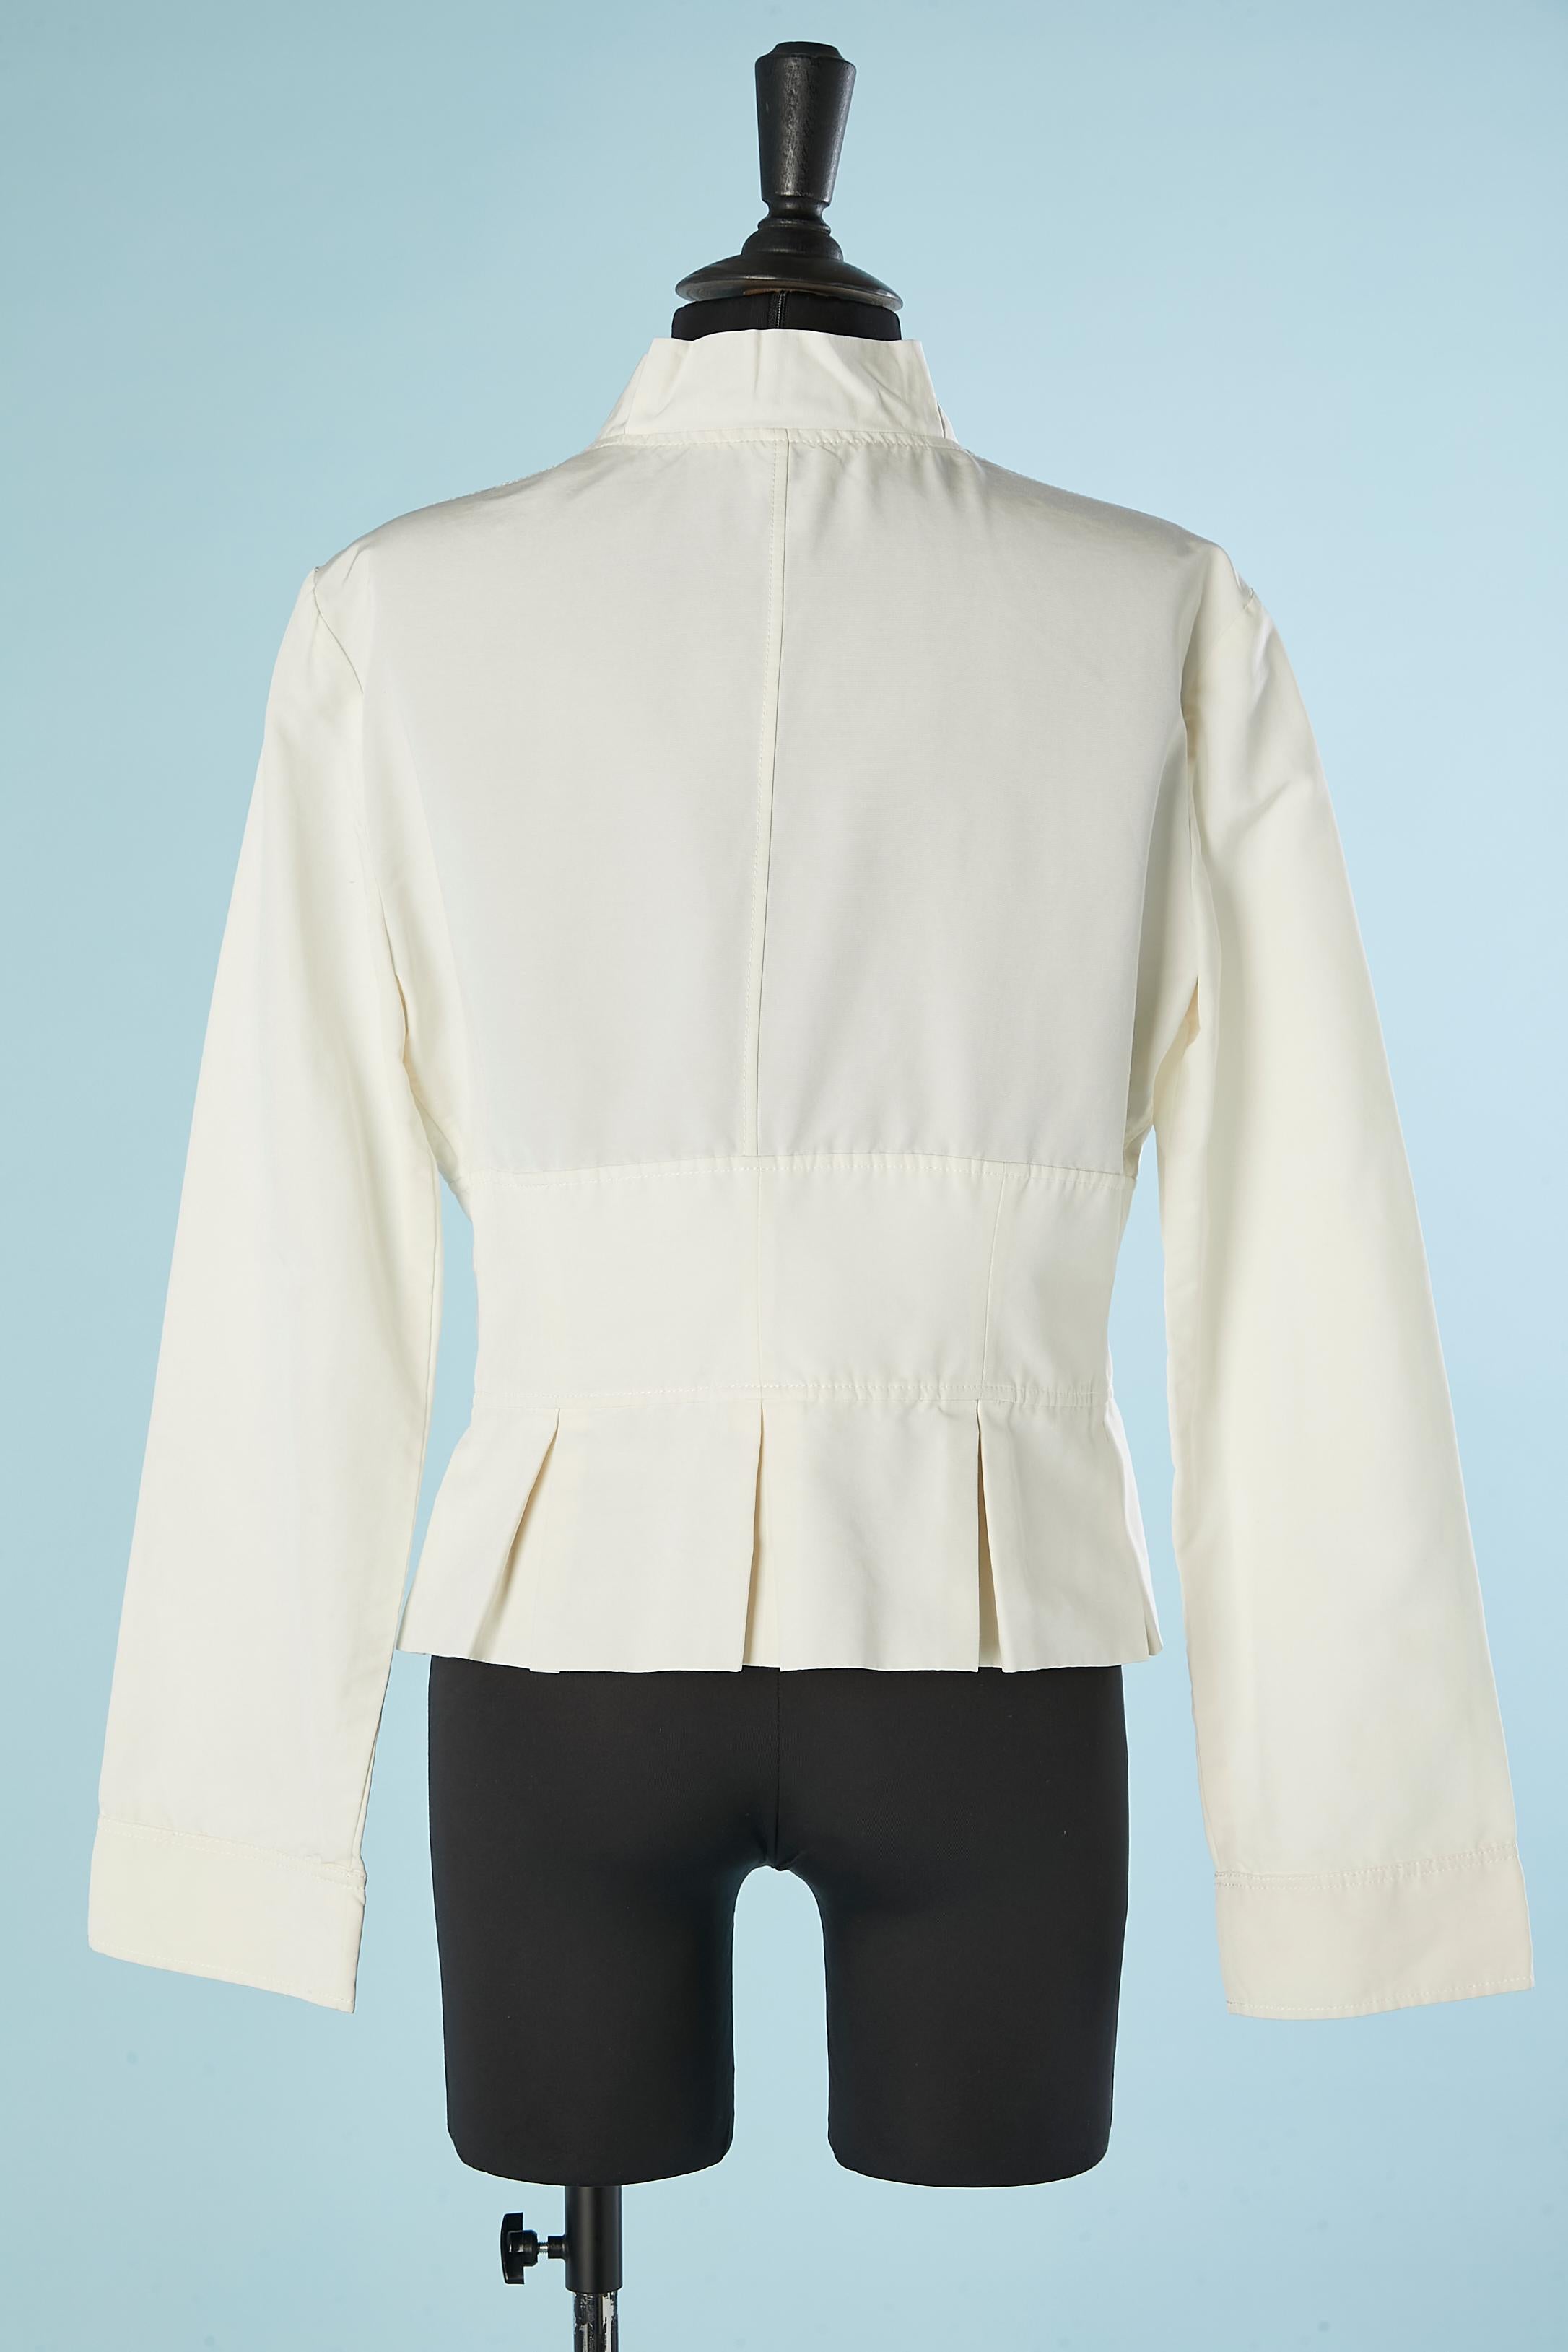 Women's Off-white cotton and silk wrap jacket with ruffles edge ARMANI COLLEZIONI For Sale